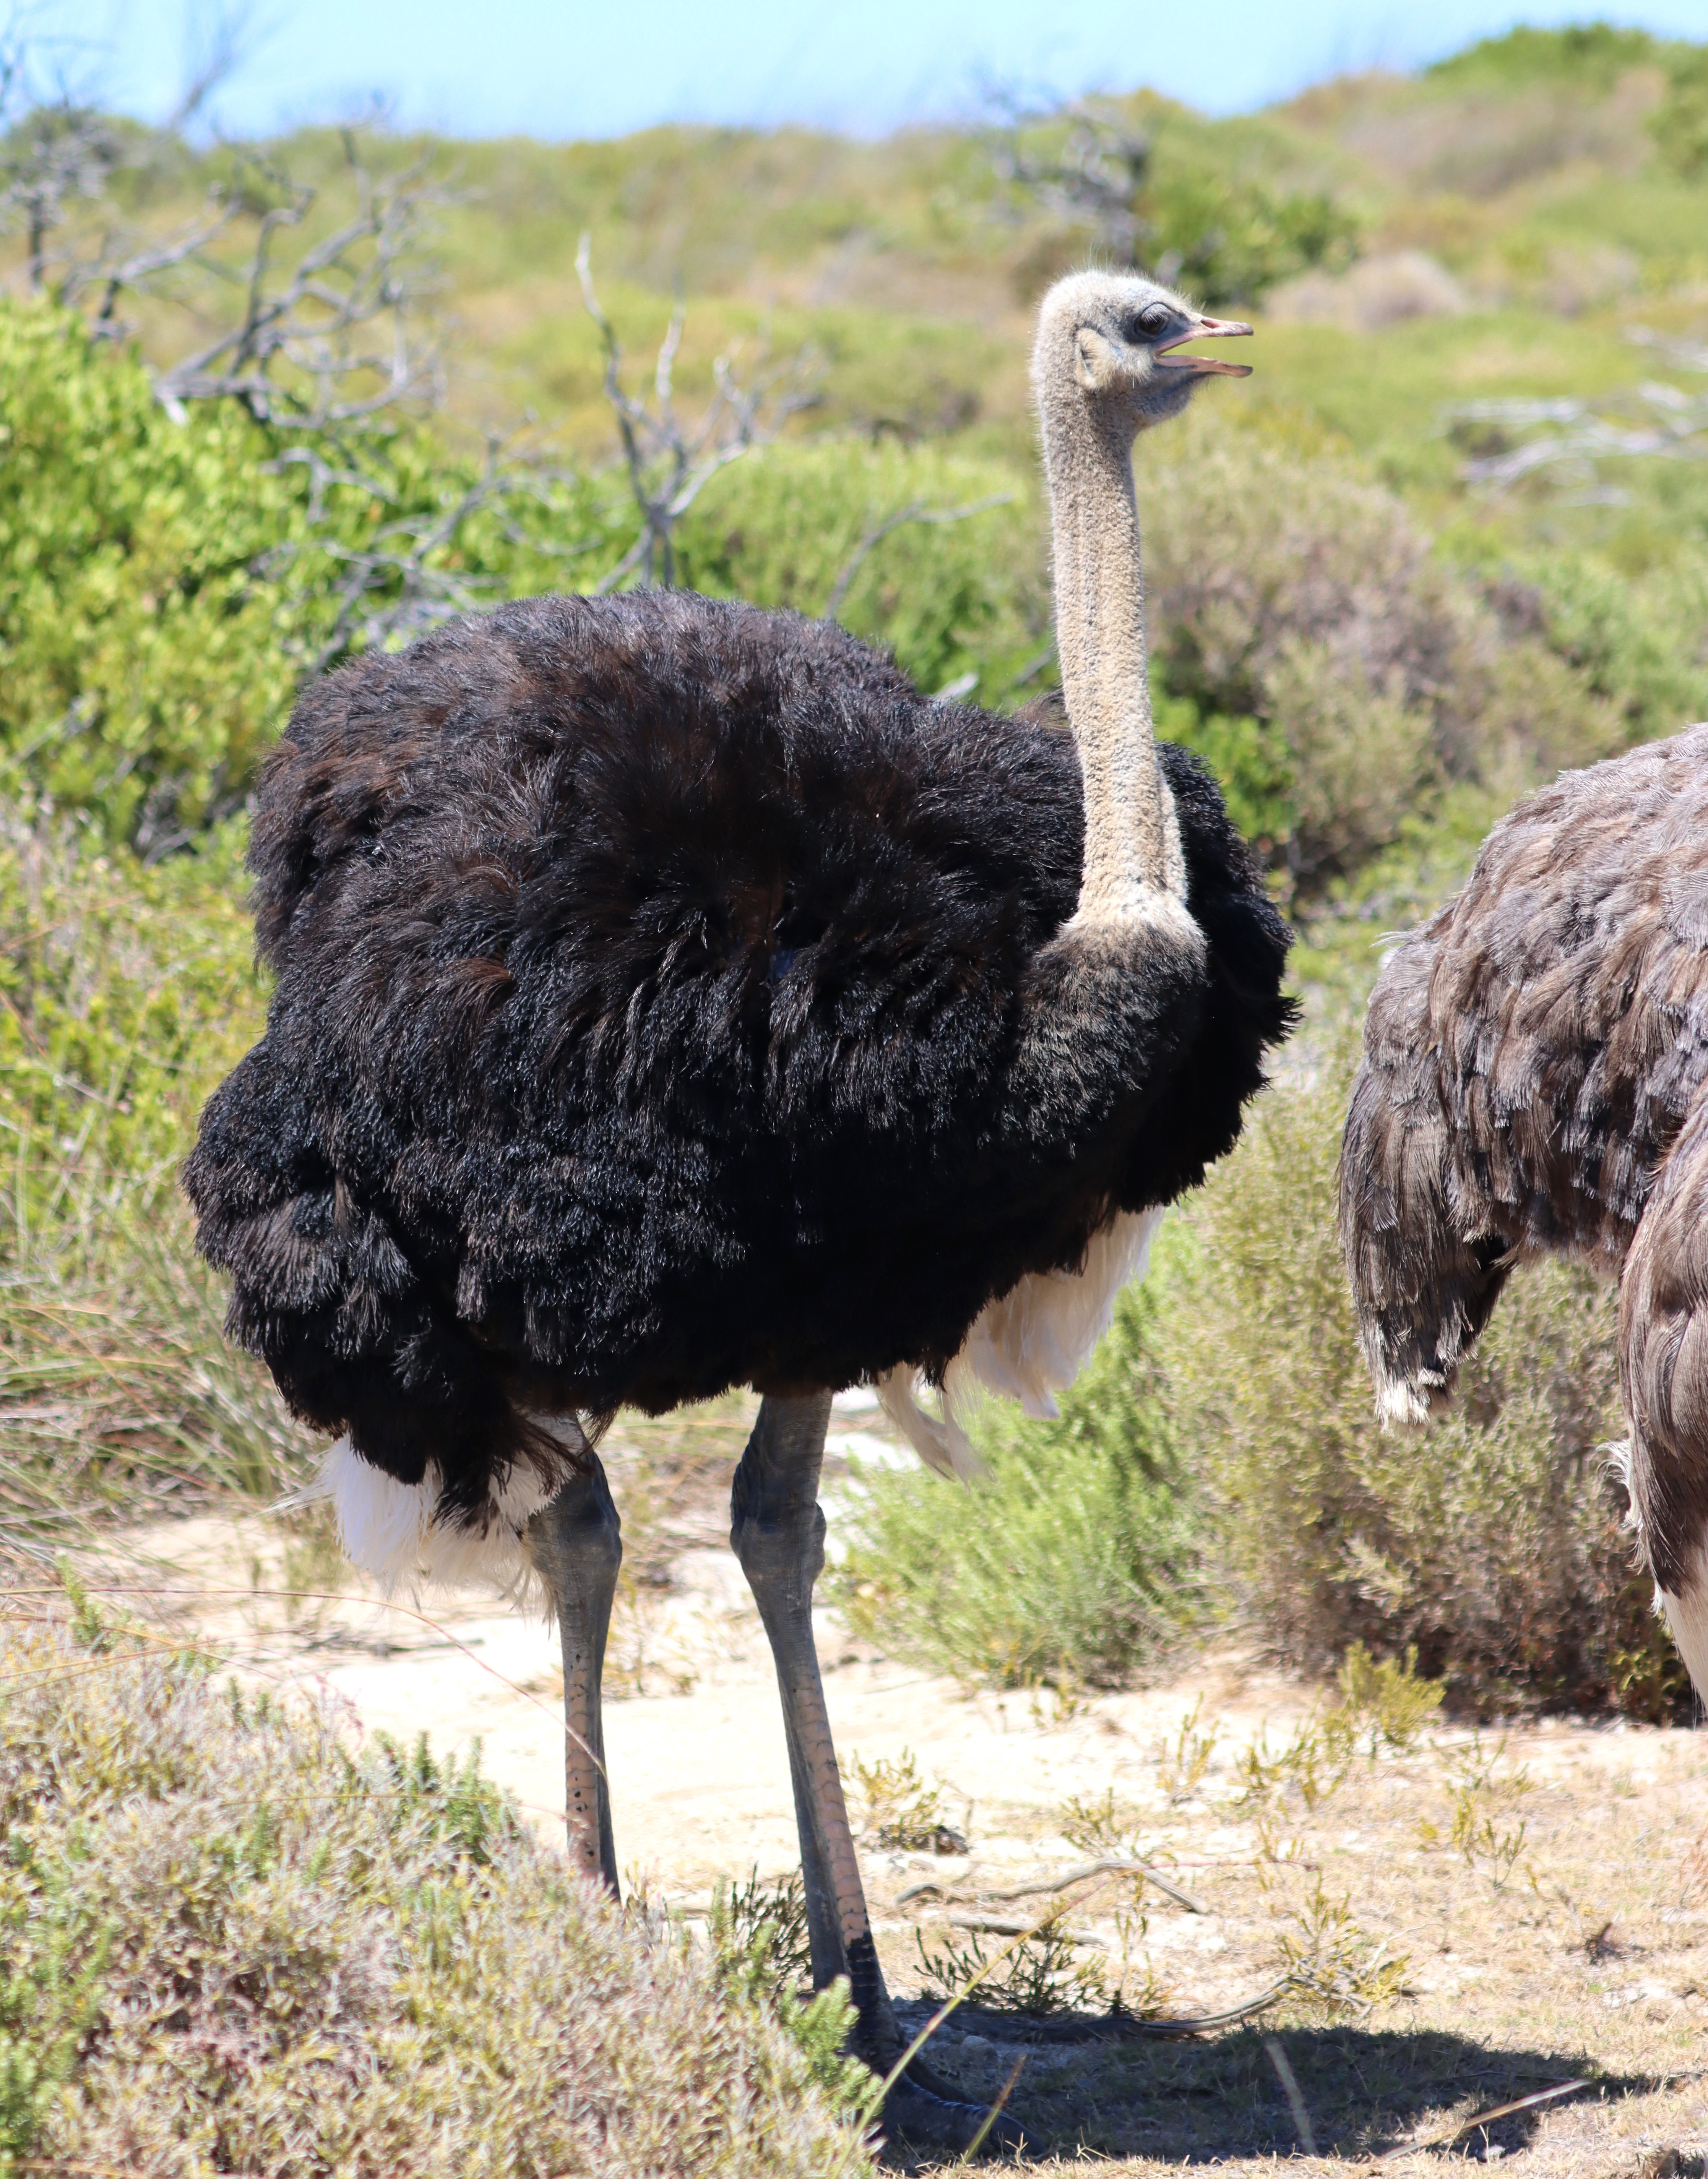 Common Ostrich.